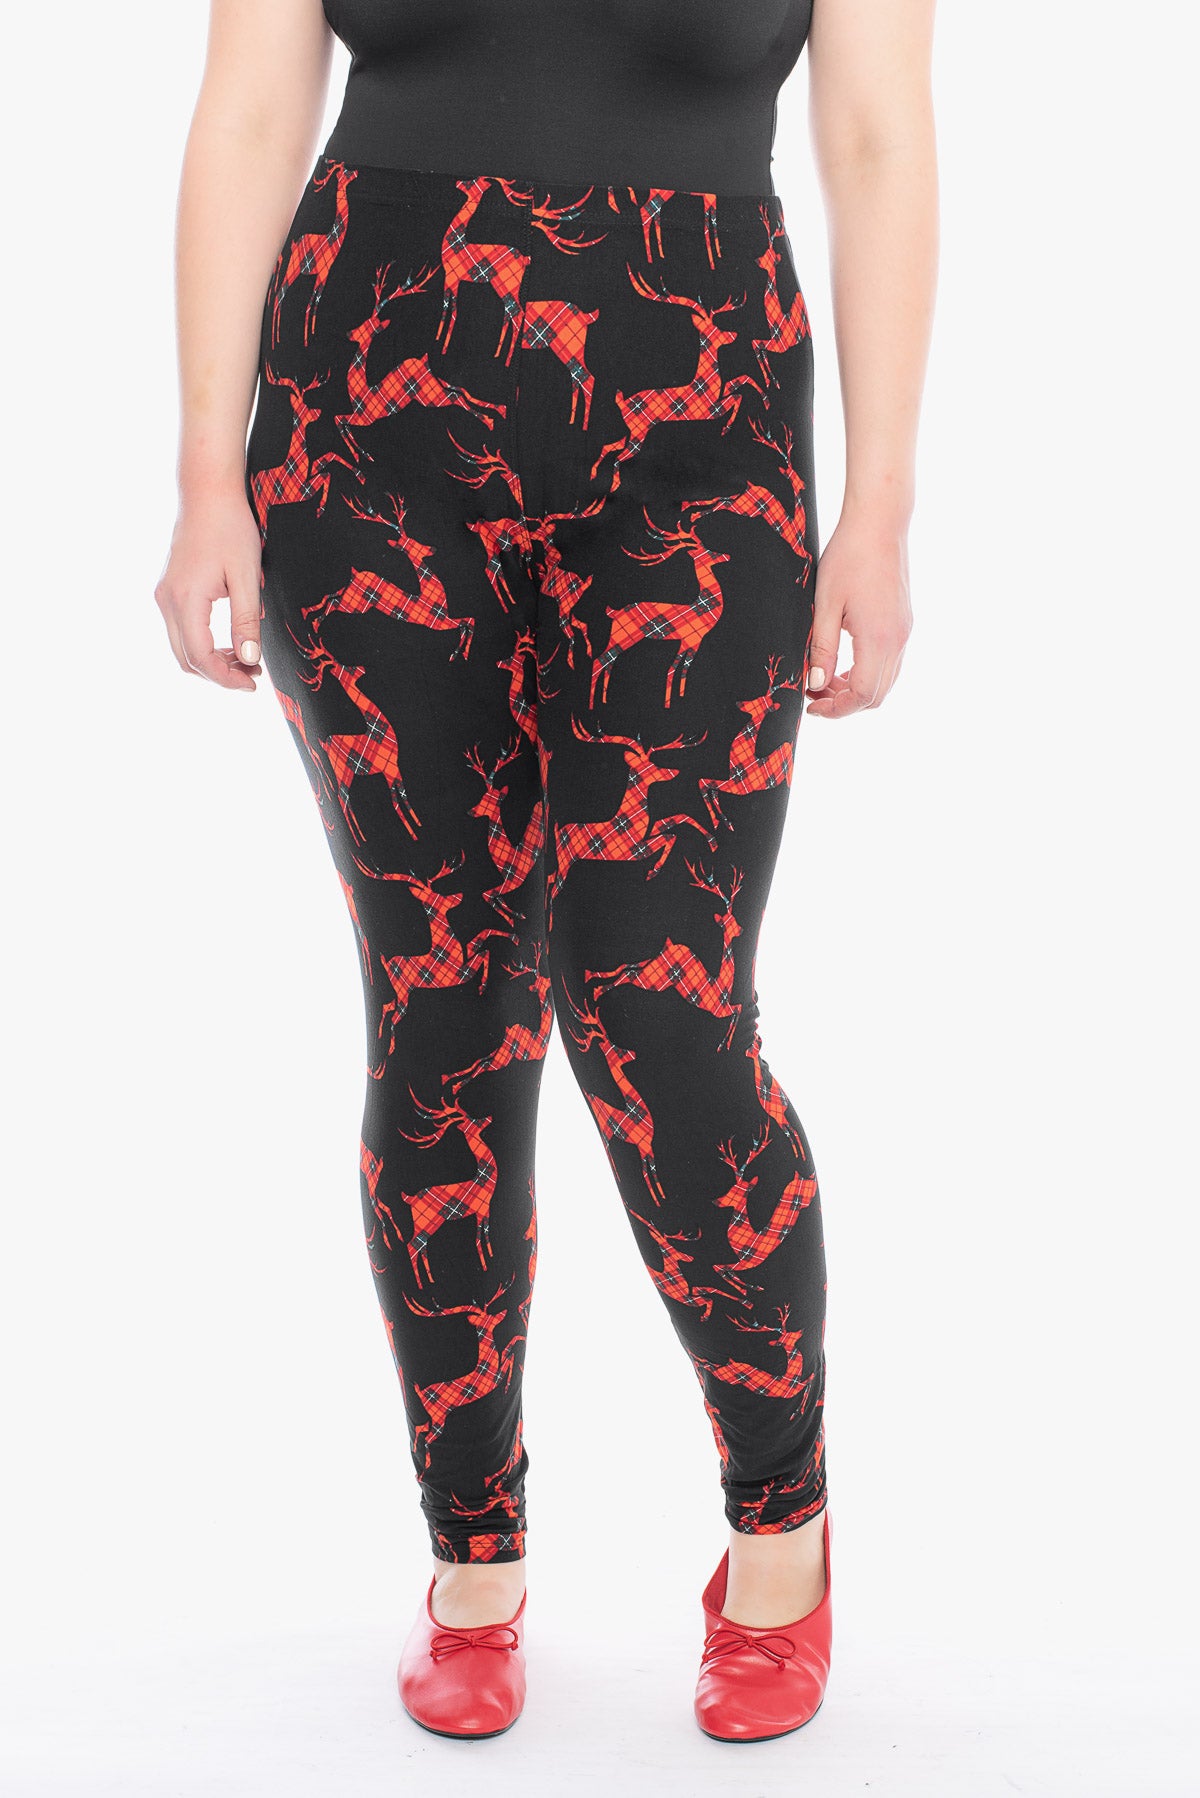 LILLY red deer leggings